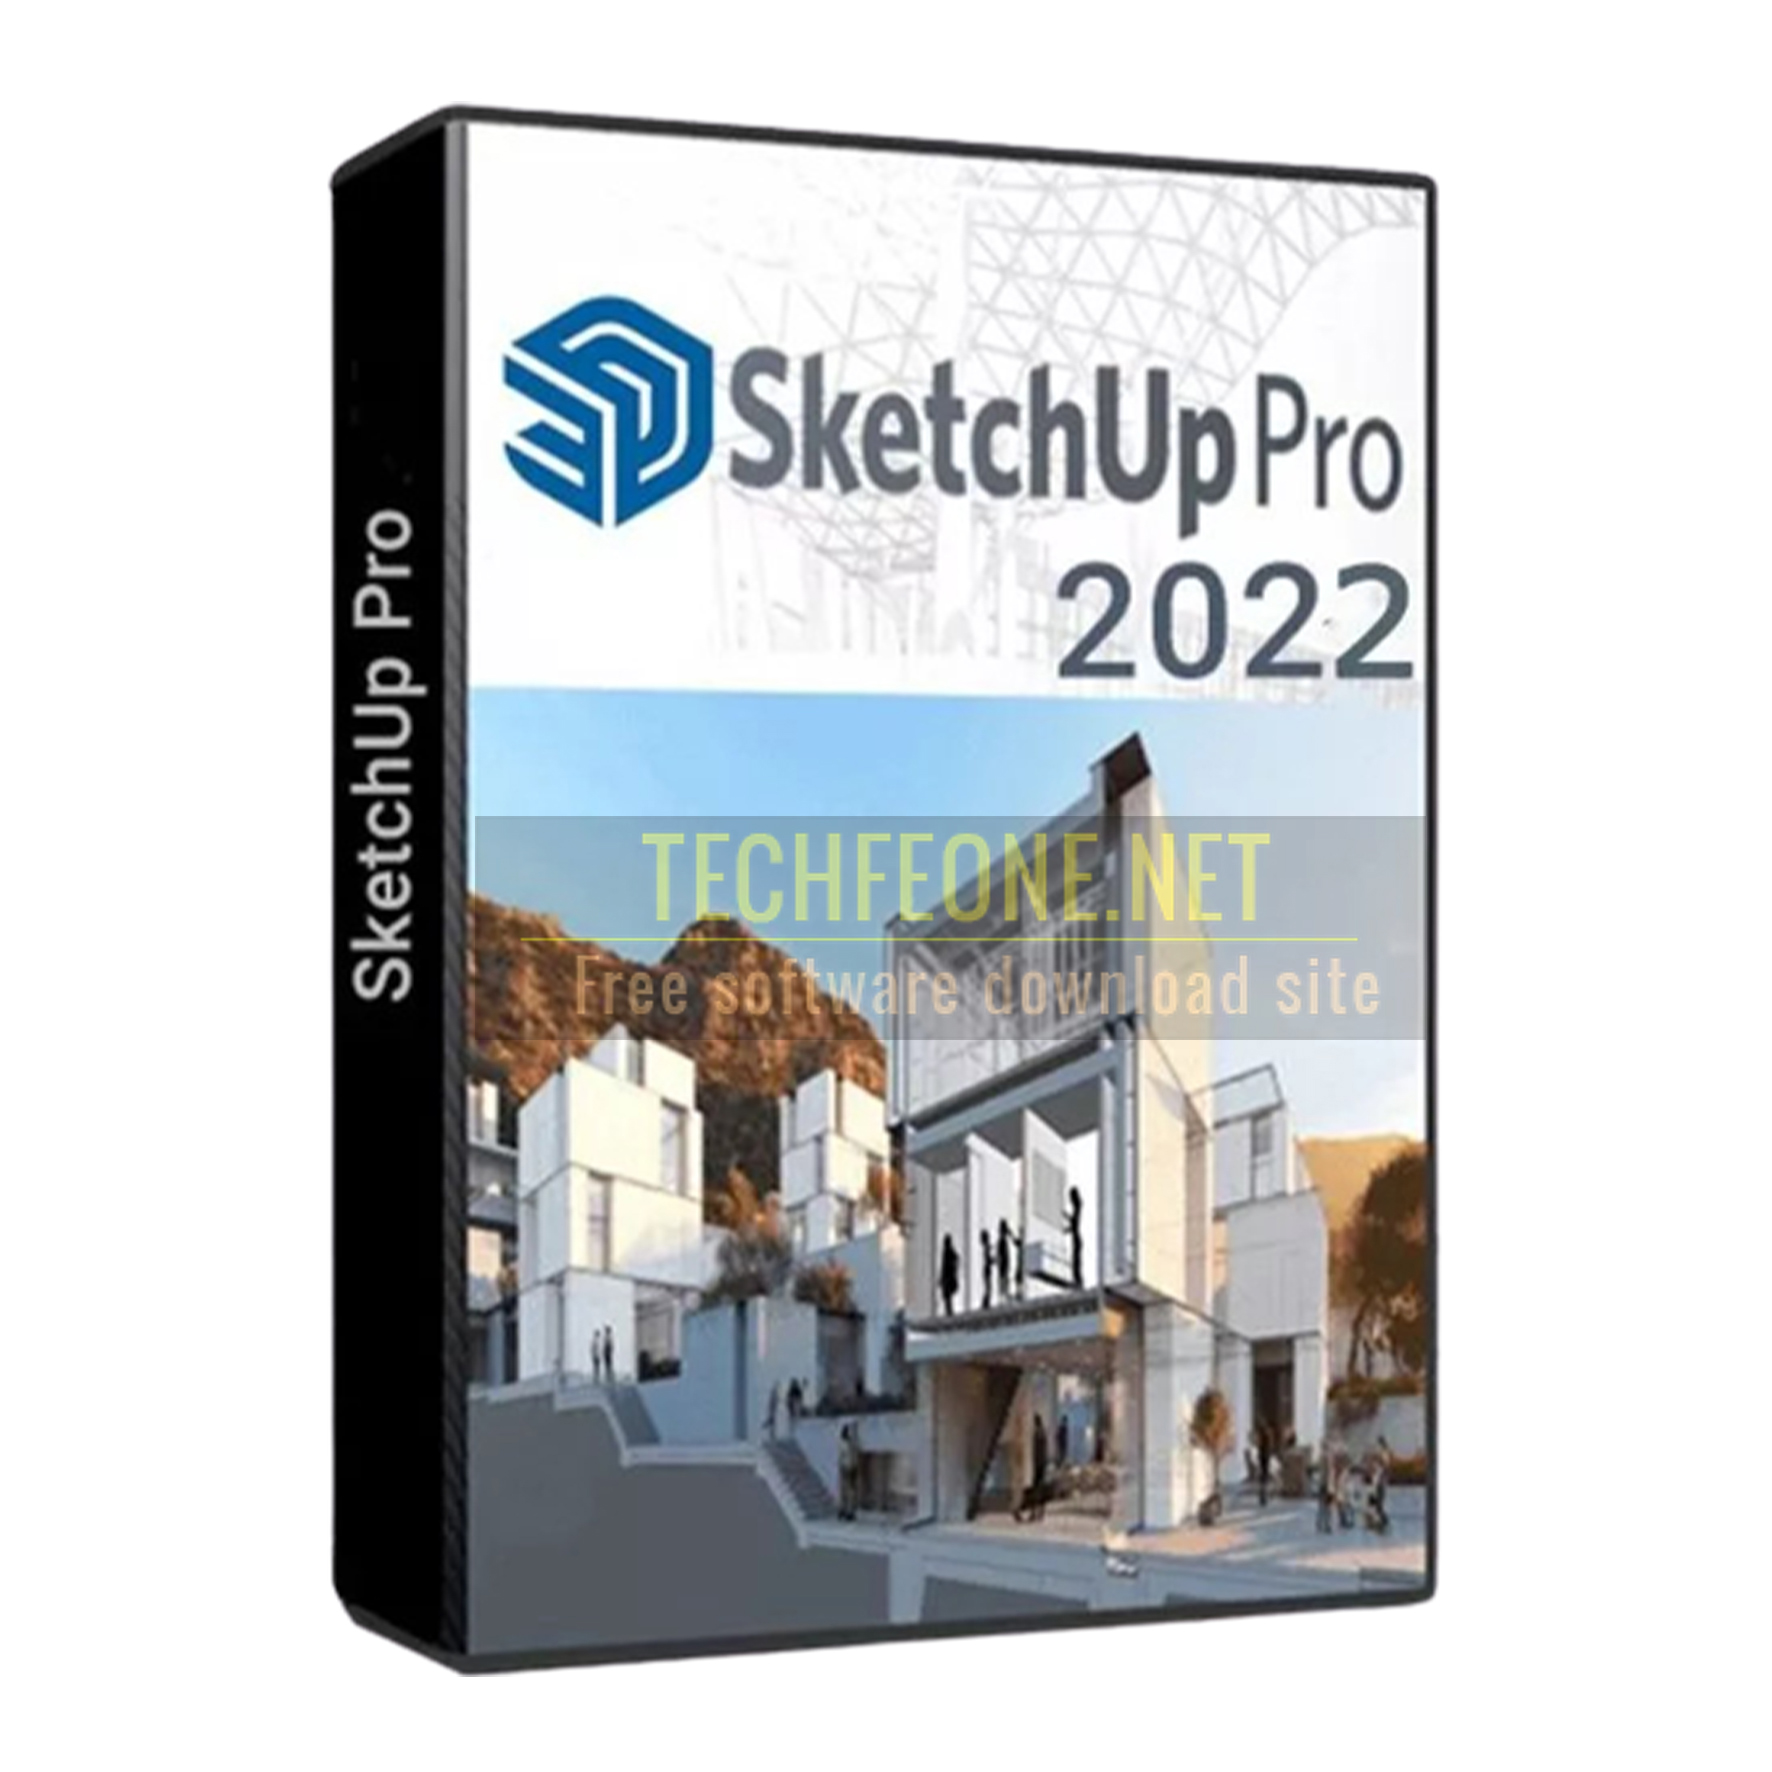 sketchup pro 2022 download free